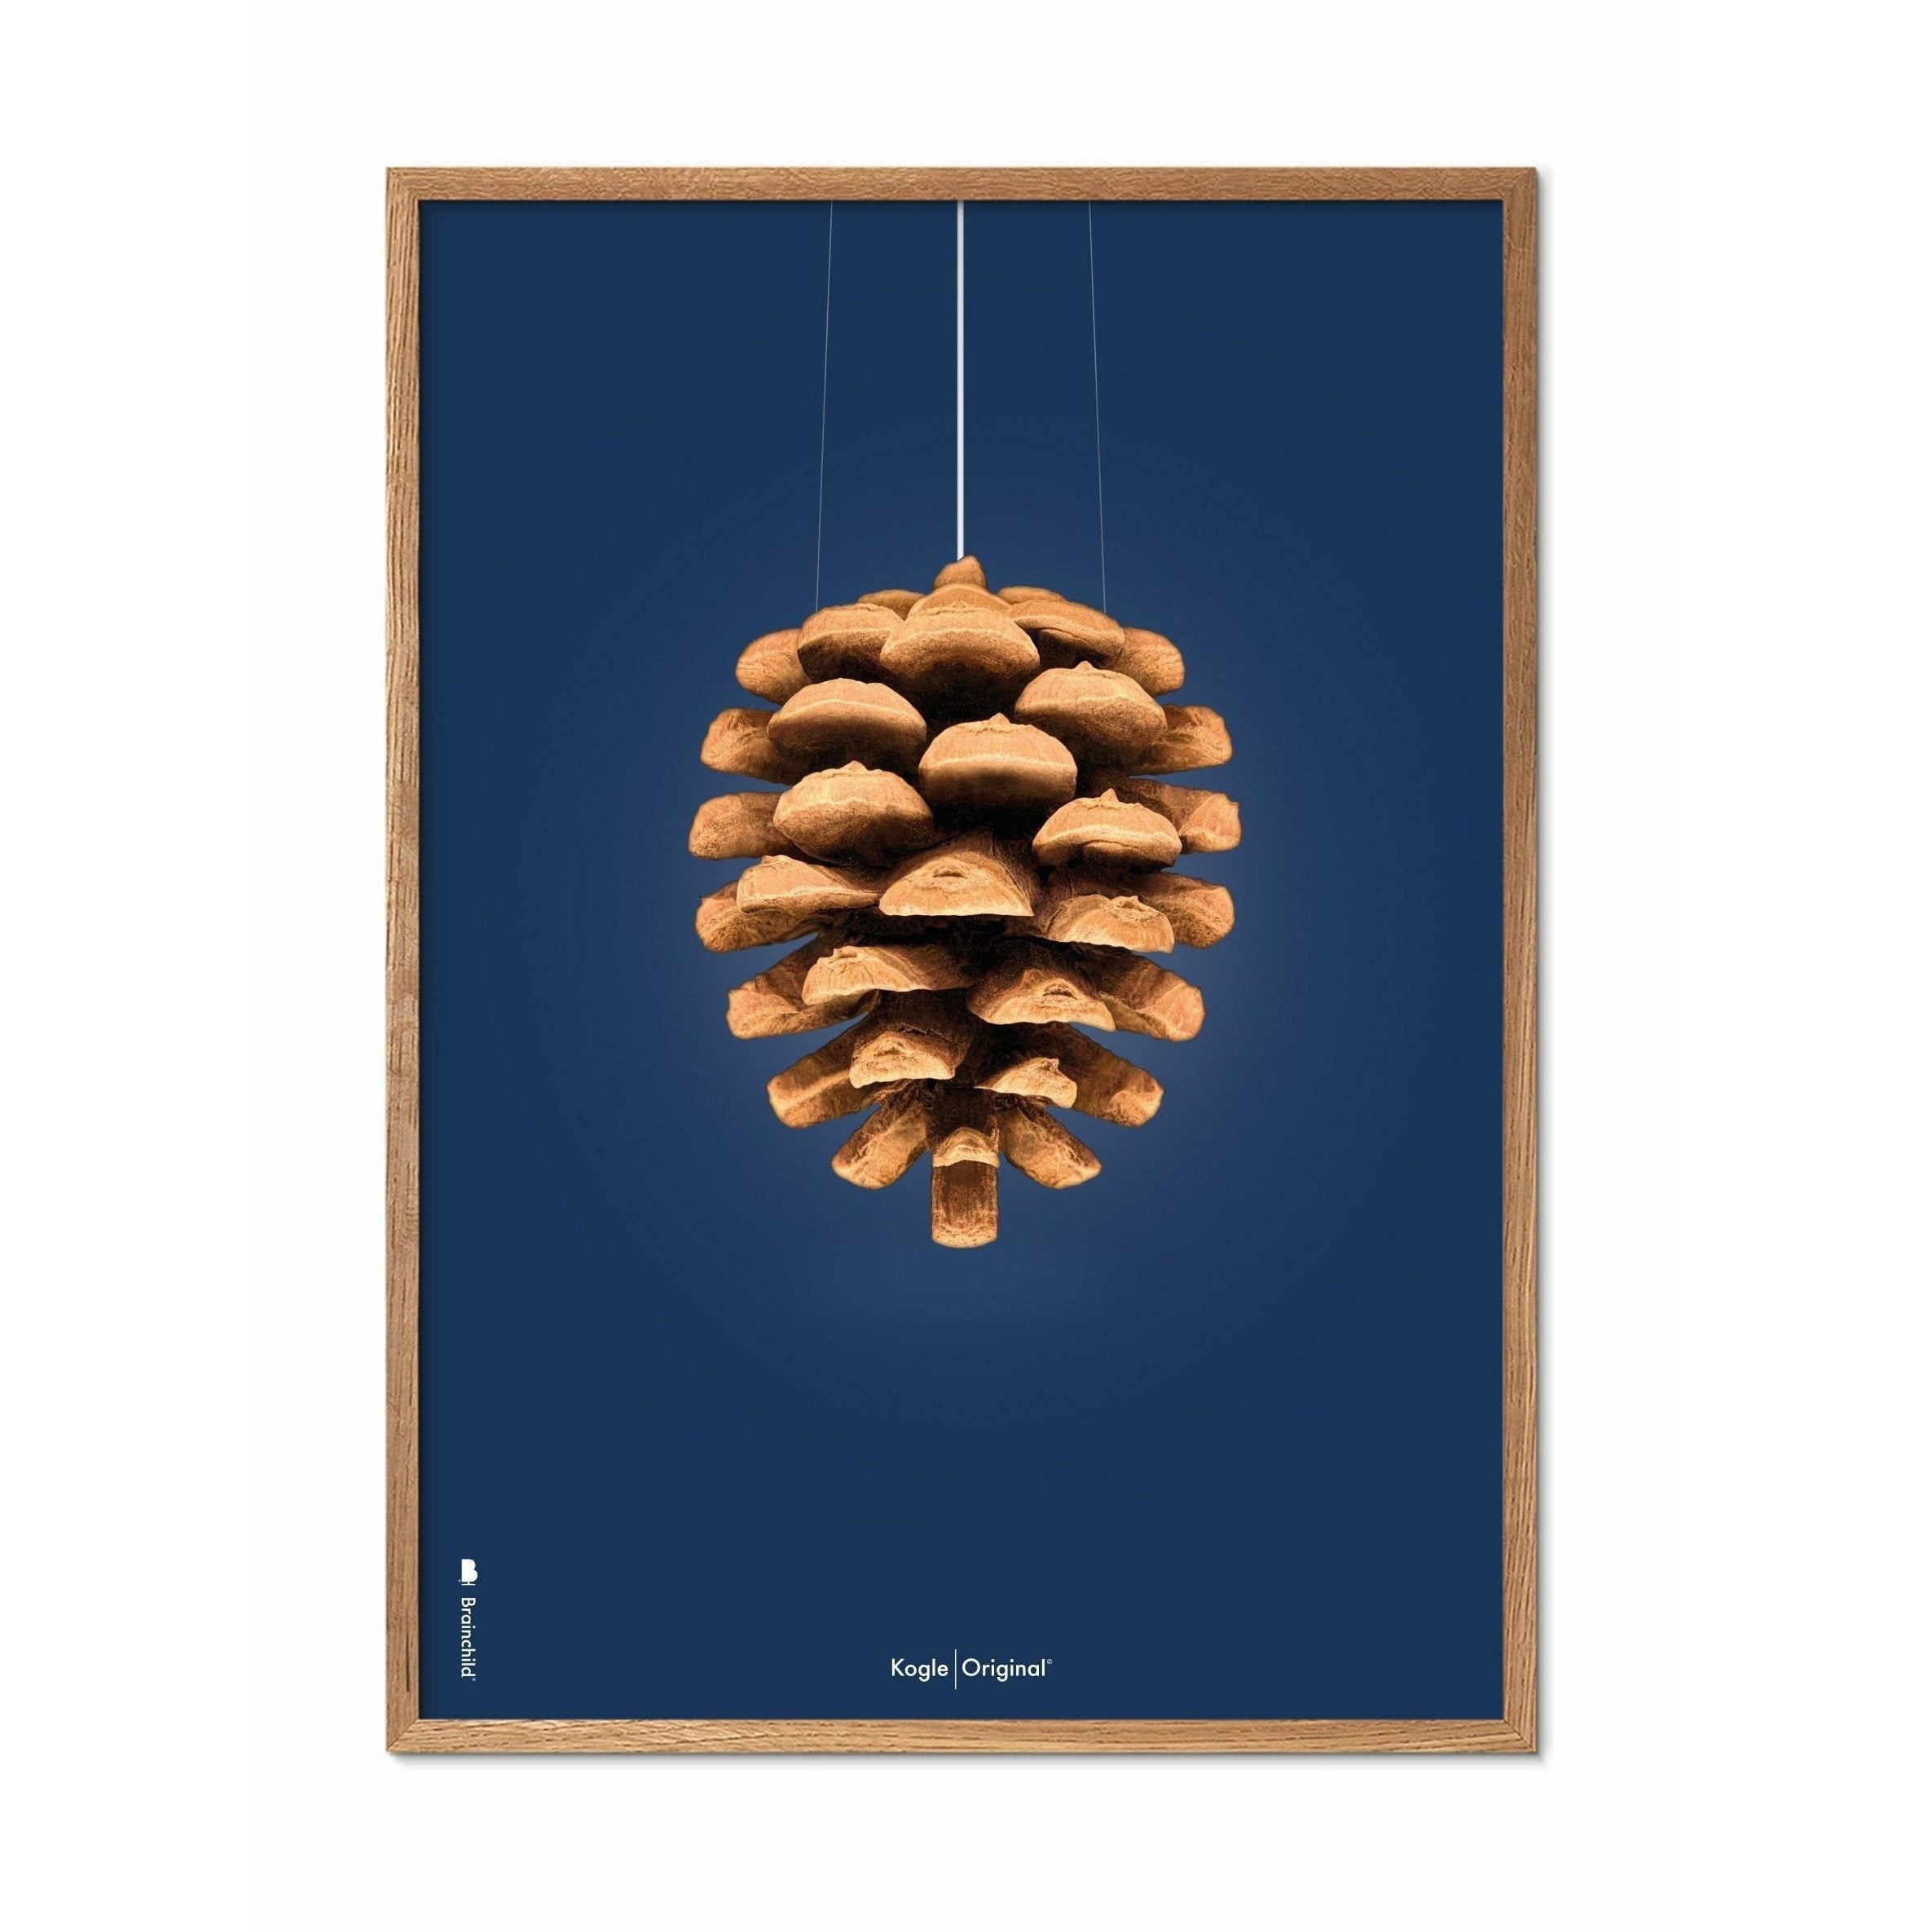 Brainchild Kogle Klassisk Plakat, Ramme I Lyst Træ 30X40 Cm, Mørkeblå Baggrund